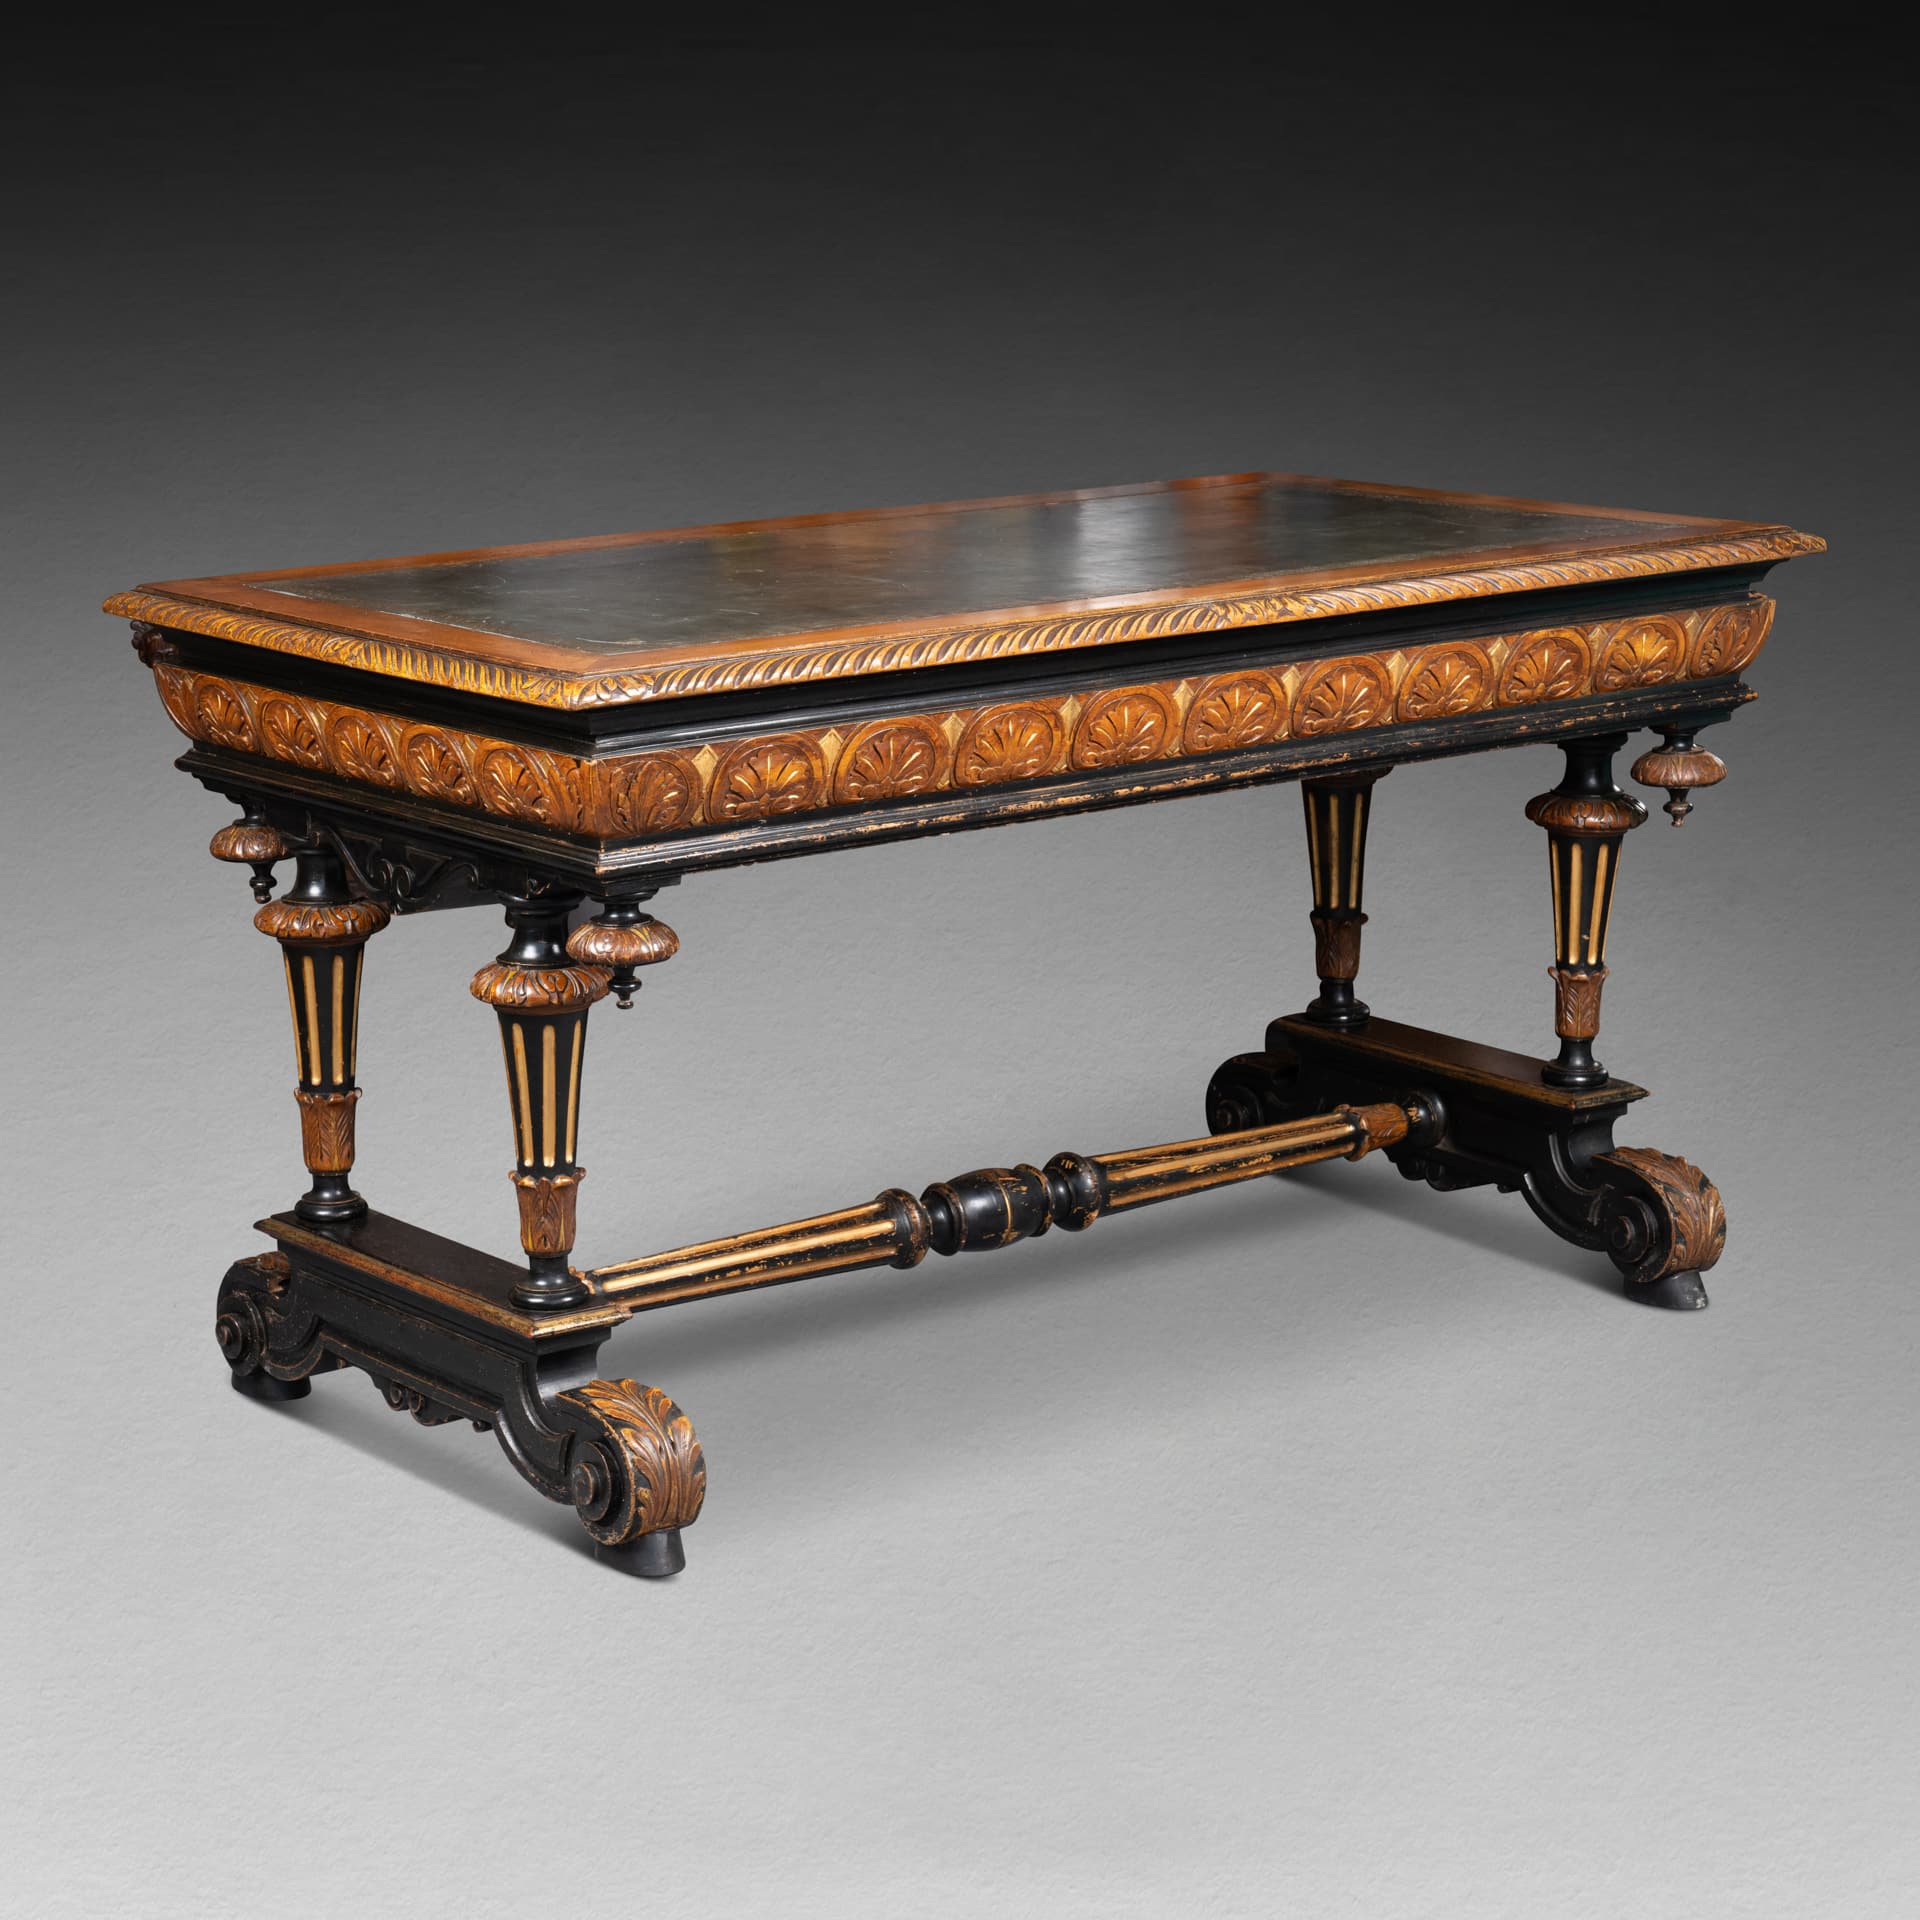 Table d’apparat néo-renaissance, XIXe siècle